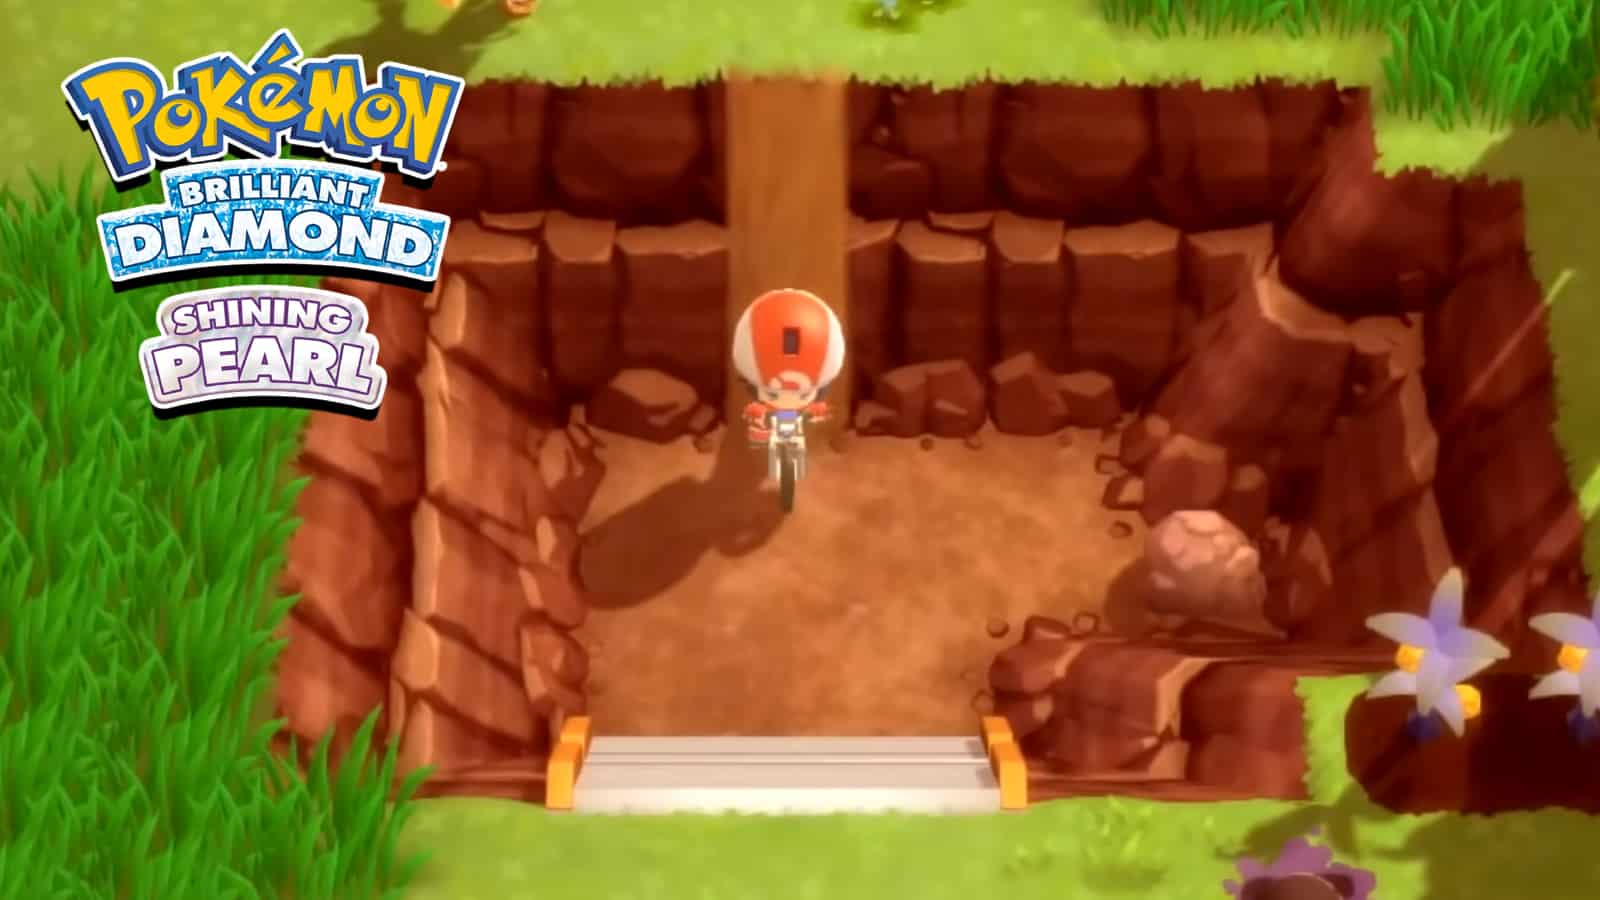 Pokemon Brilliant Diamond & Shining Pearl Bike screenshot from trailer